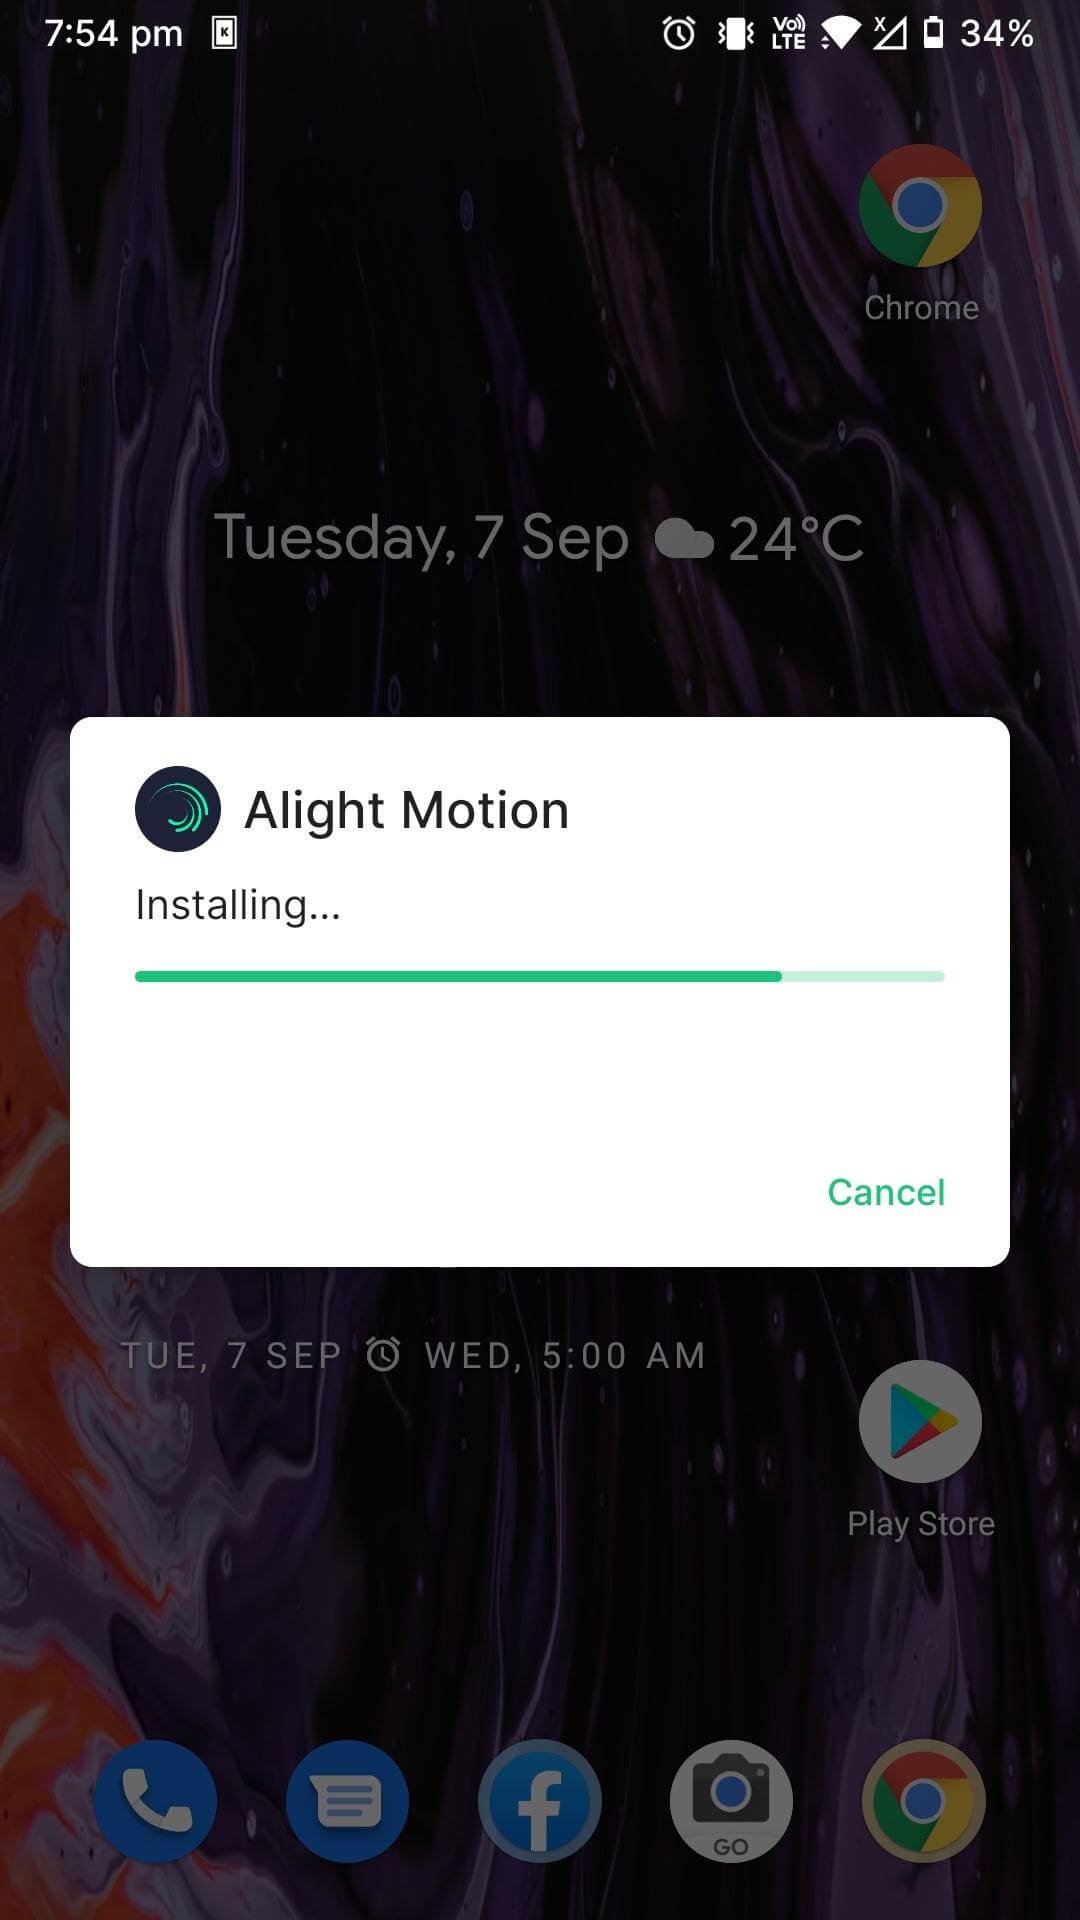 app is installing